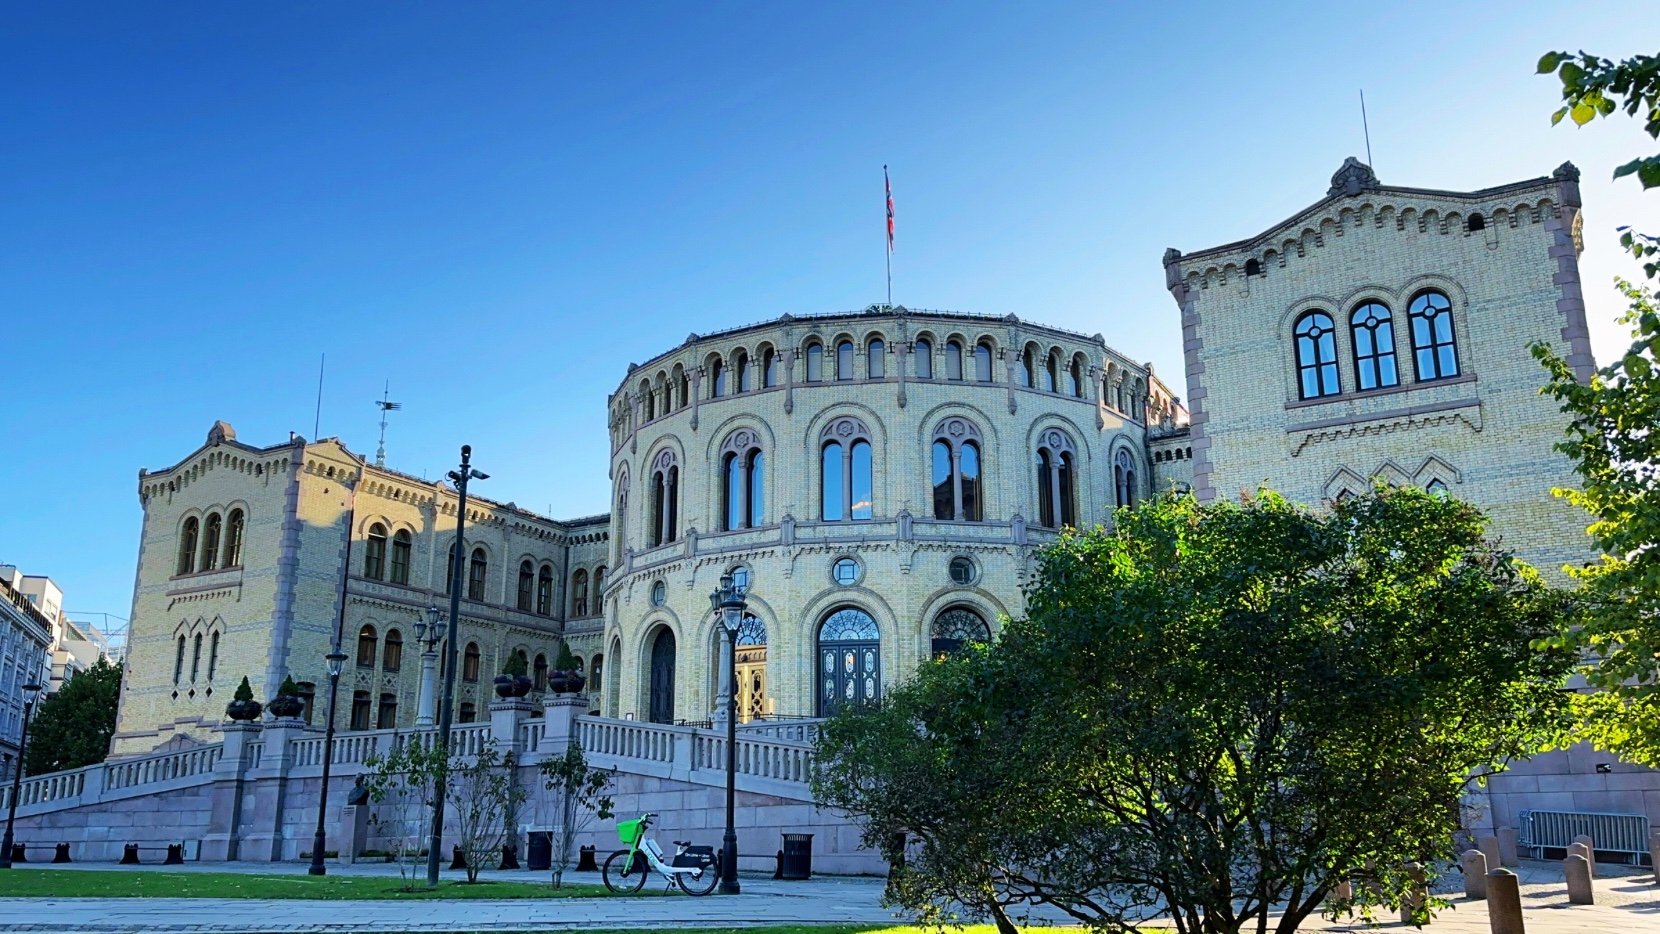 Norwegian Parliament building in Oslo. Norway. Photo: David Nikel.